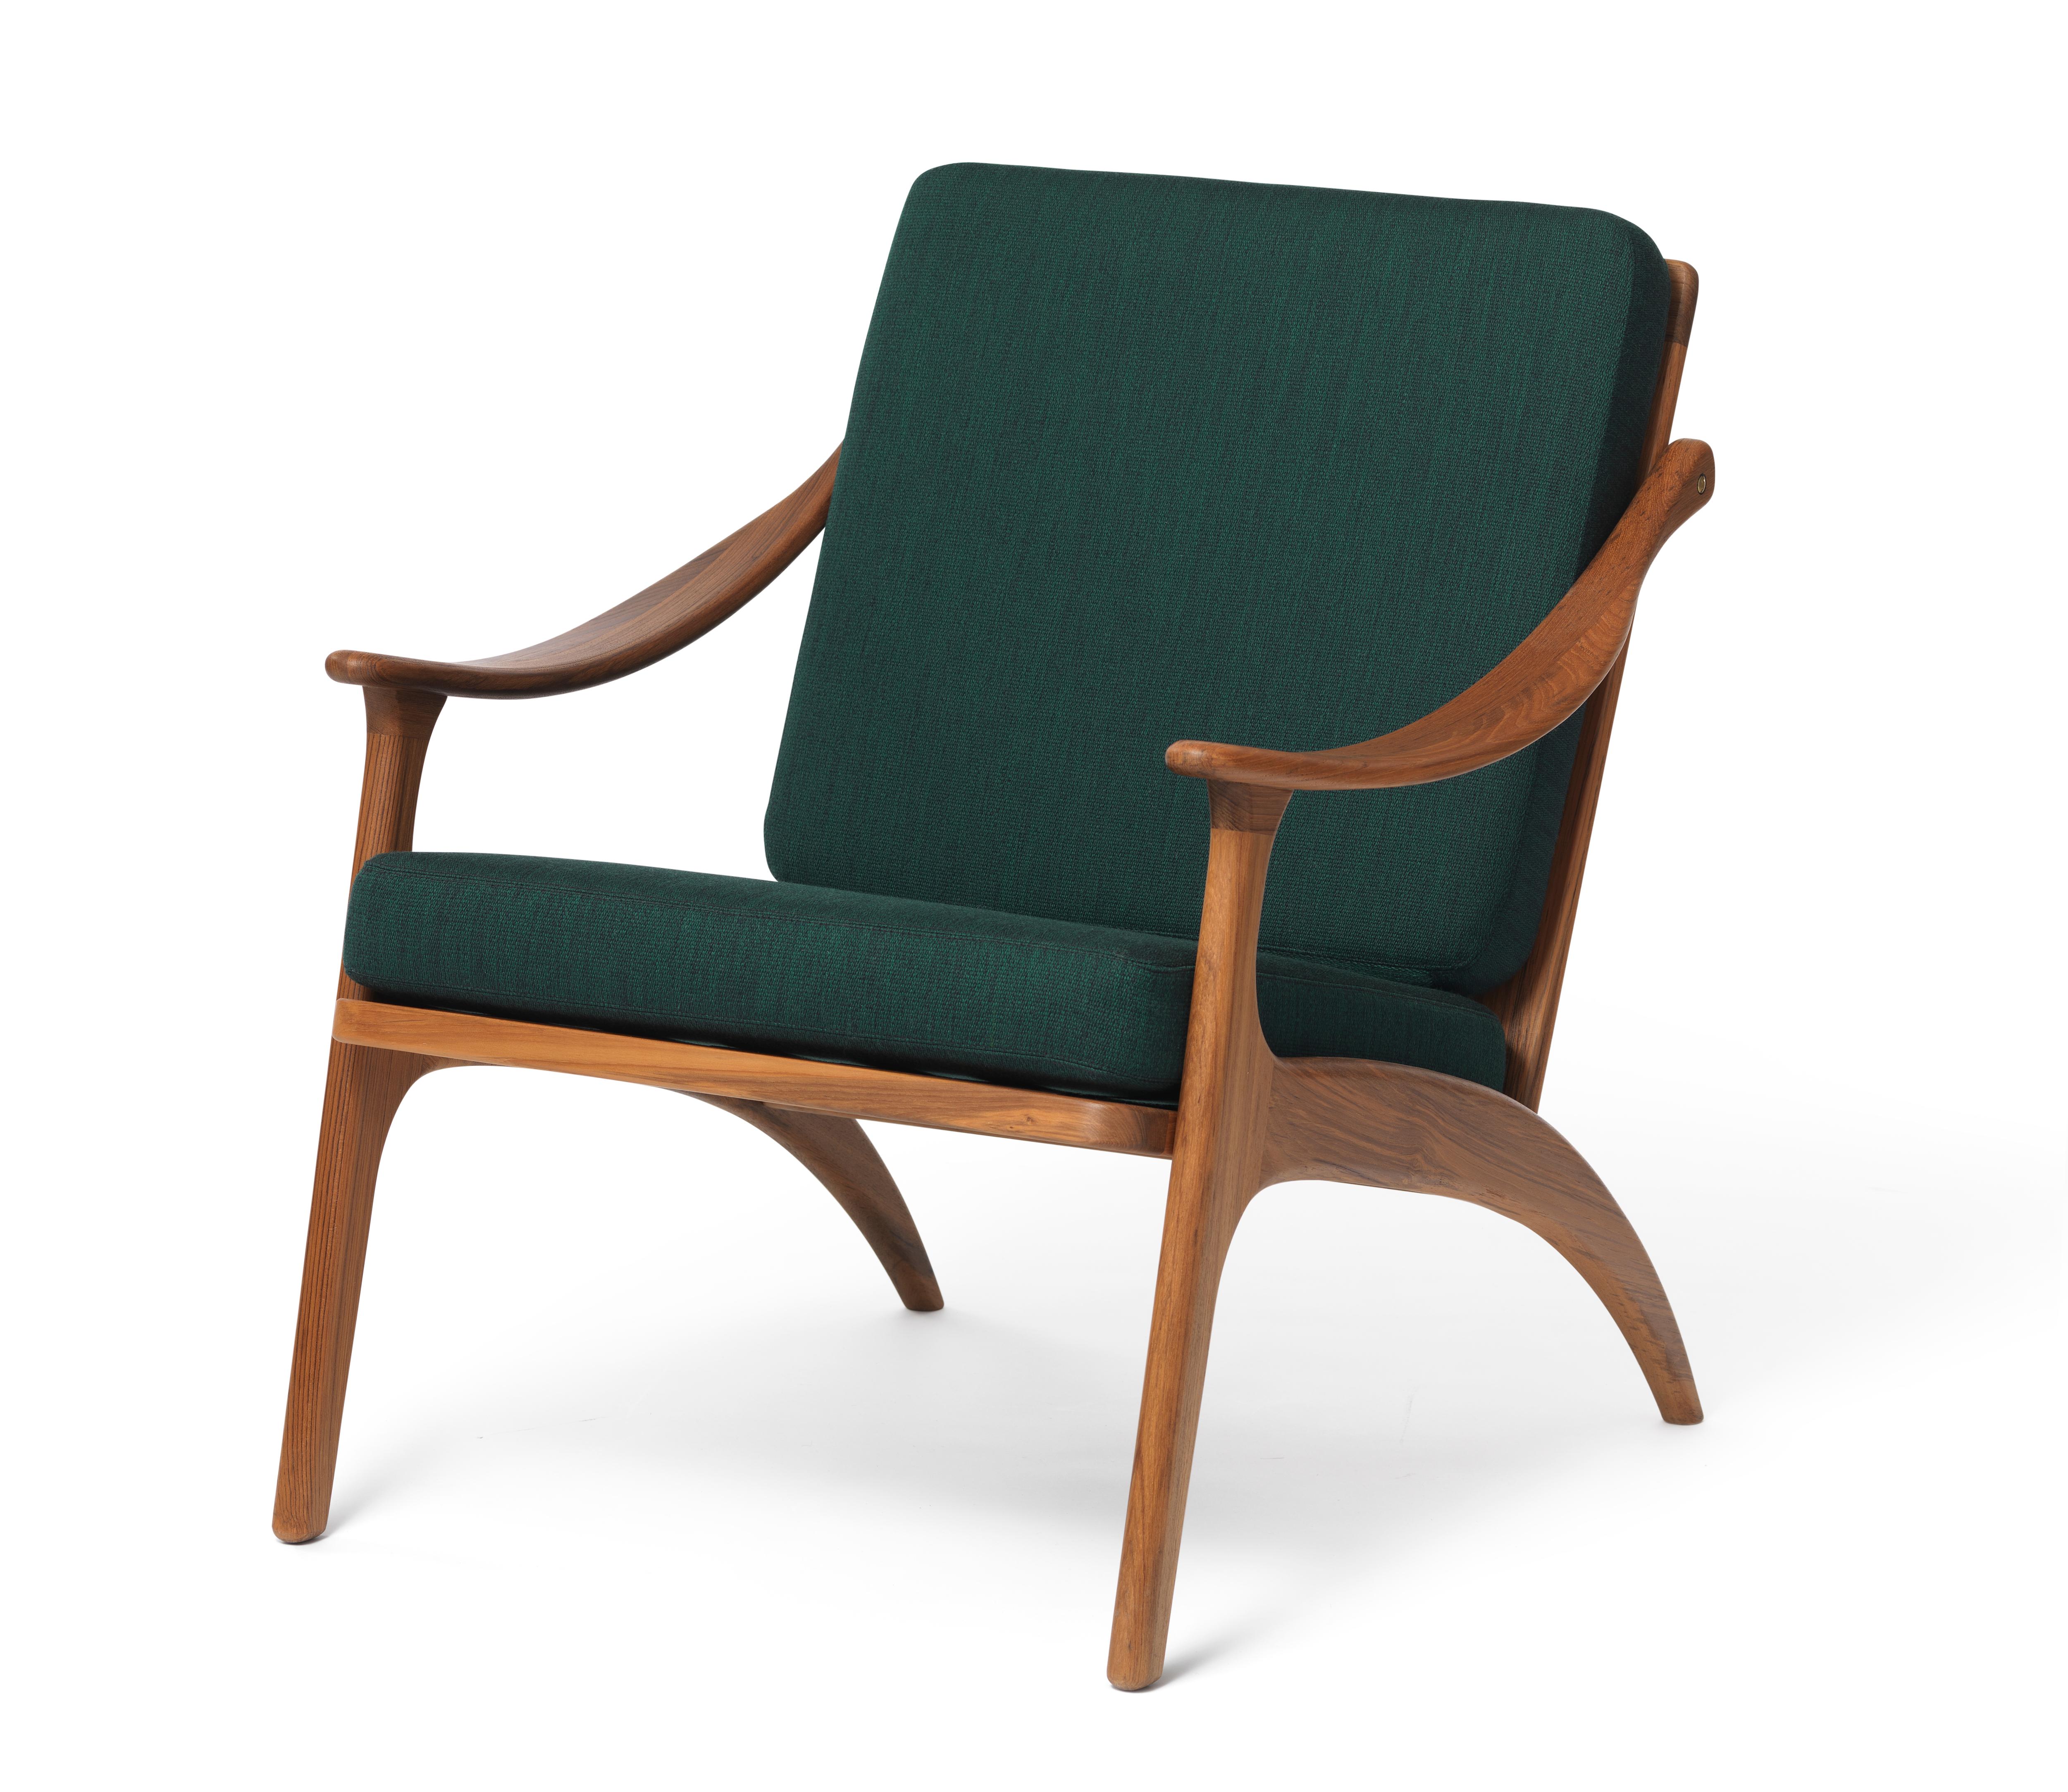 For Sale: Green (Balder 982) Lean Back Monochrome Lounge Chair in Teak, by Arne Hovmand-Olsen from Warm